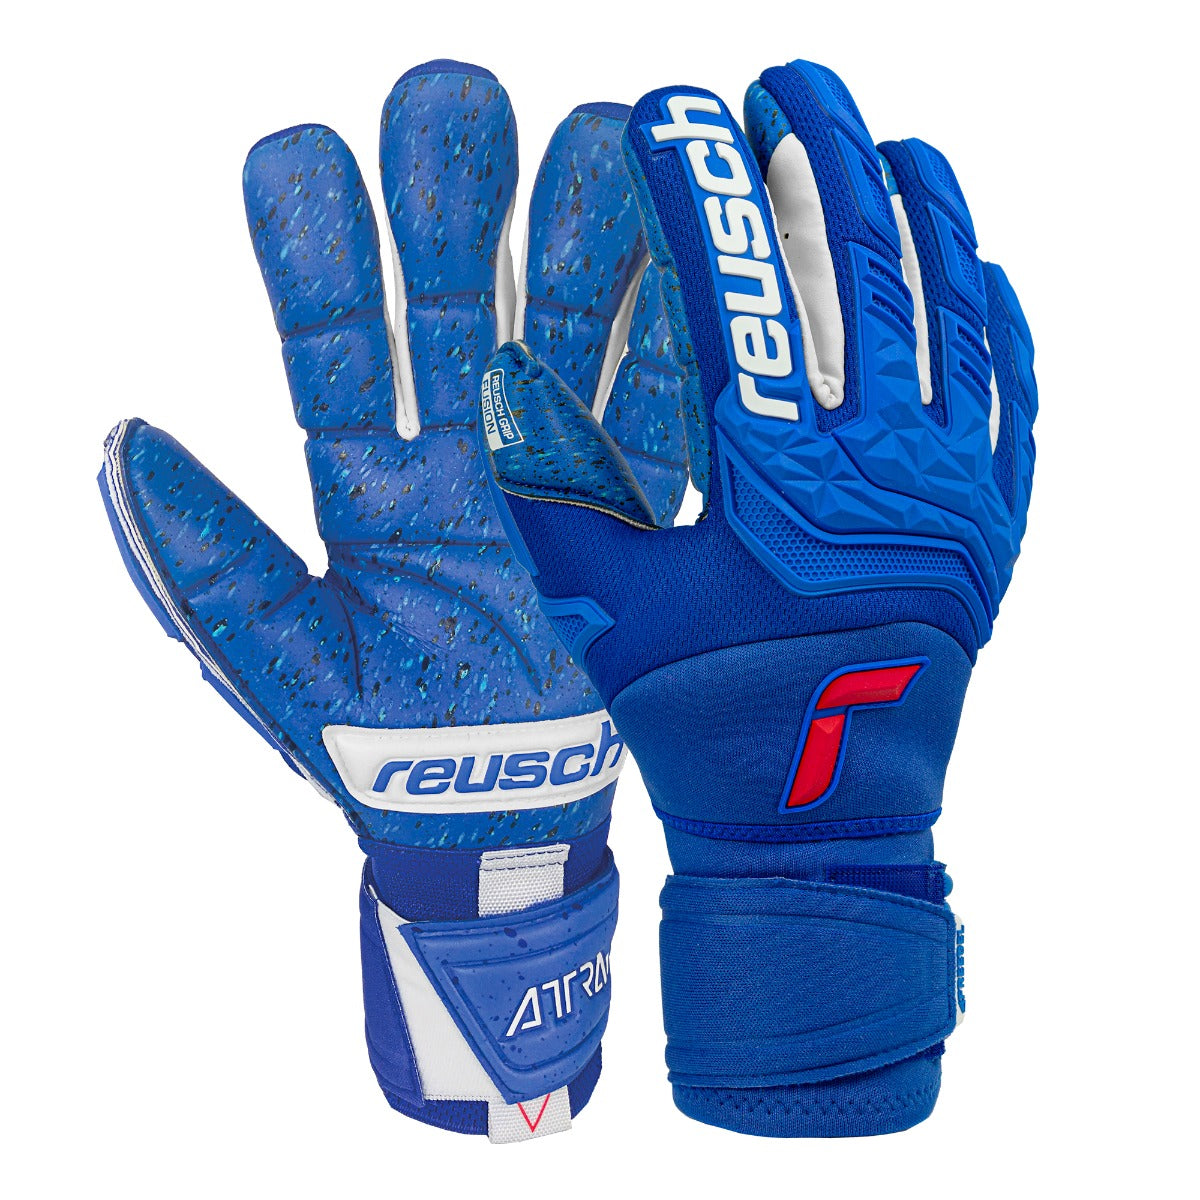 Reusch Attrakt Freegel Fusion Ortho Tech Goaliator Goalkeeper Gloves - Royal-White (Pair)